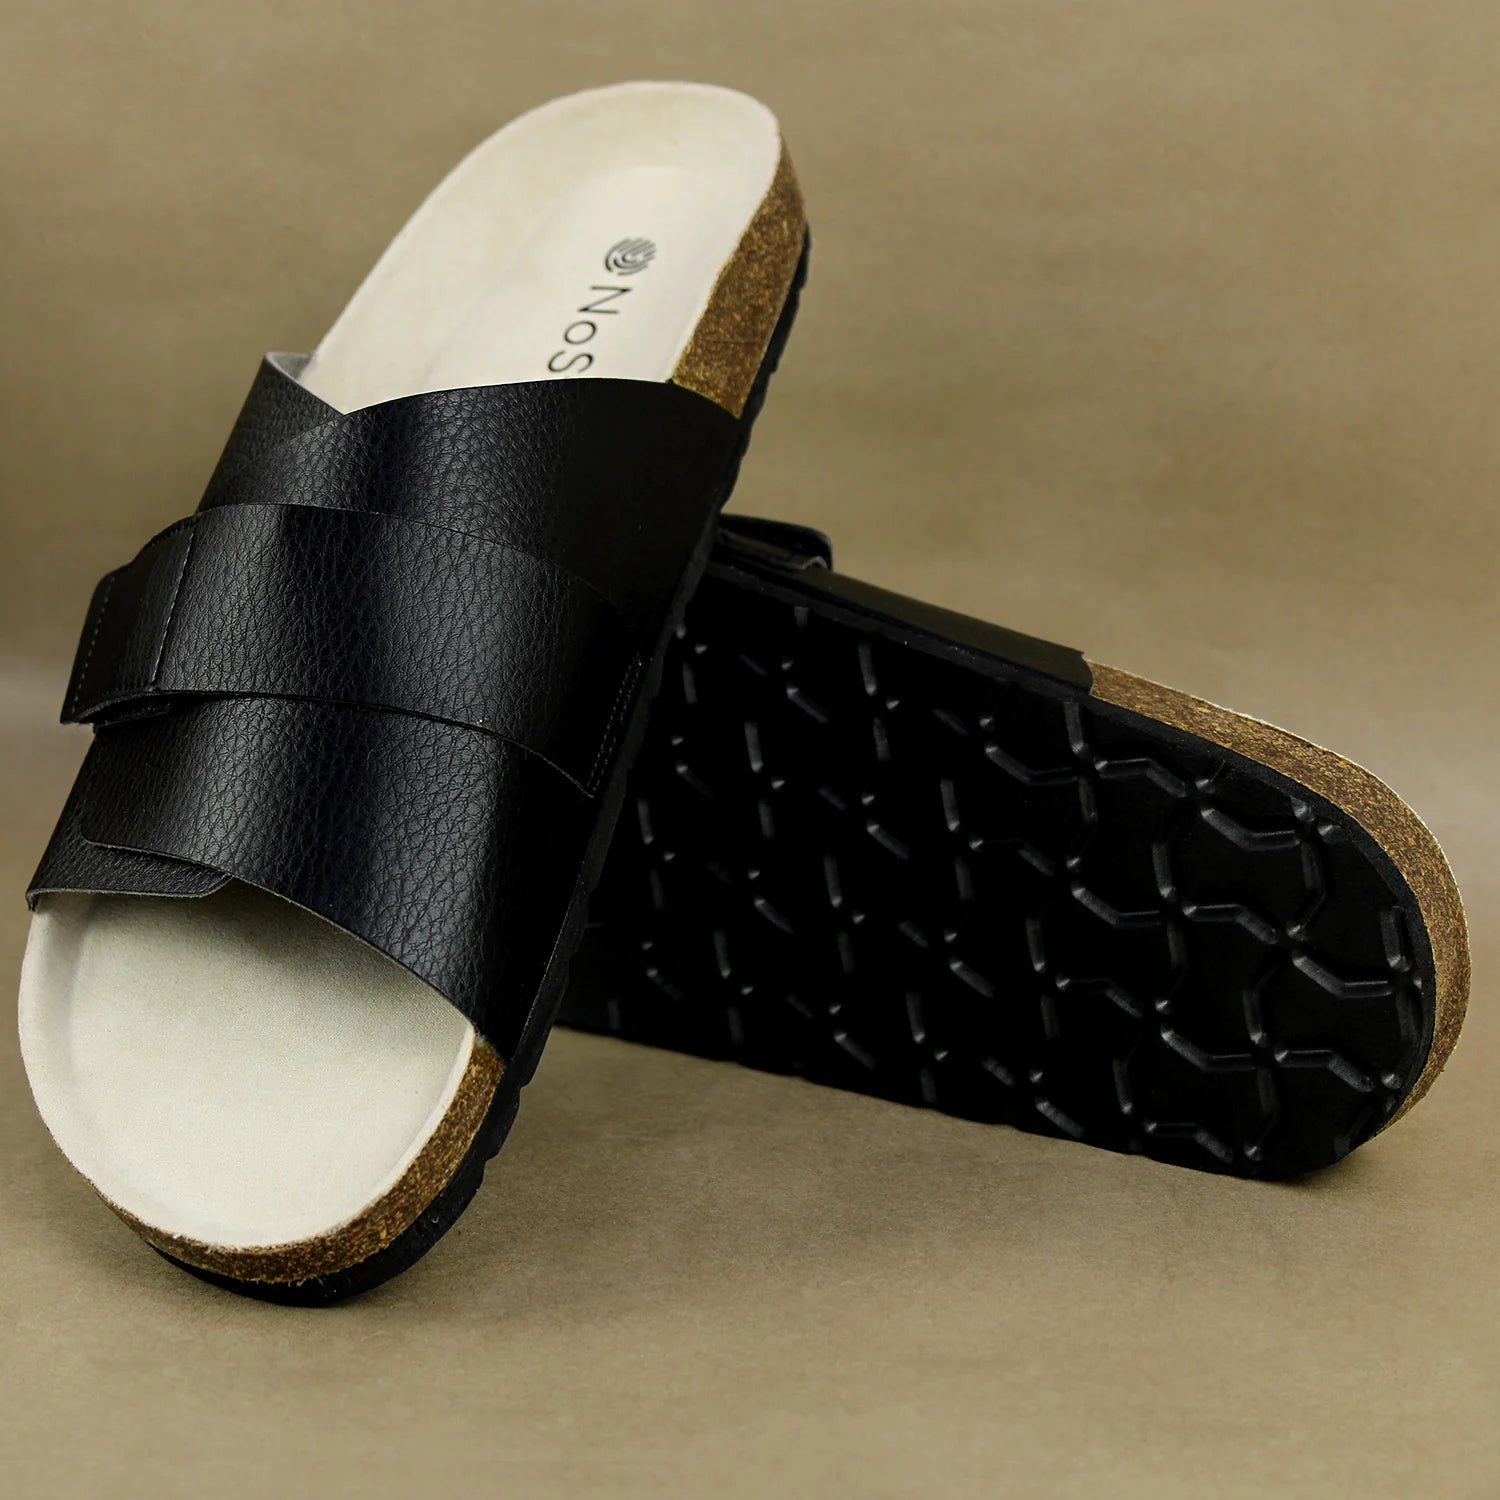 Stylish black men's cork sandals with adjustable vegan leather straps